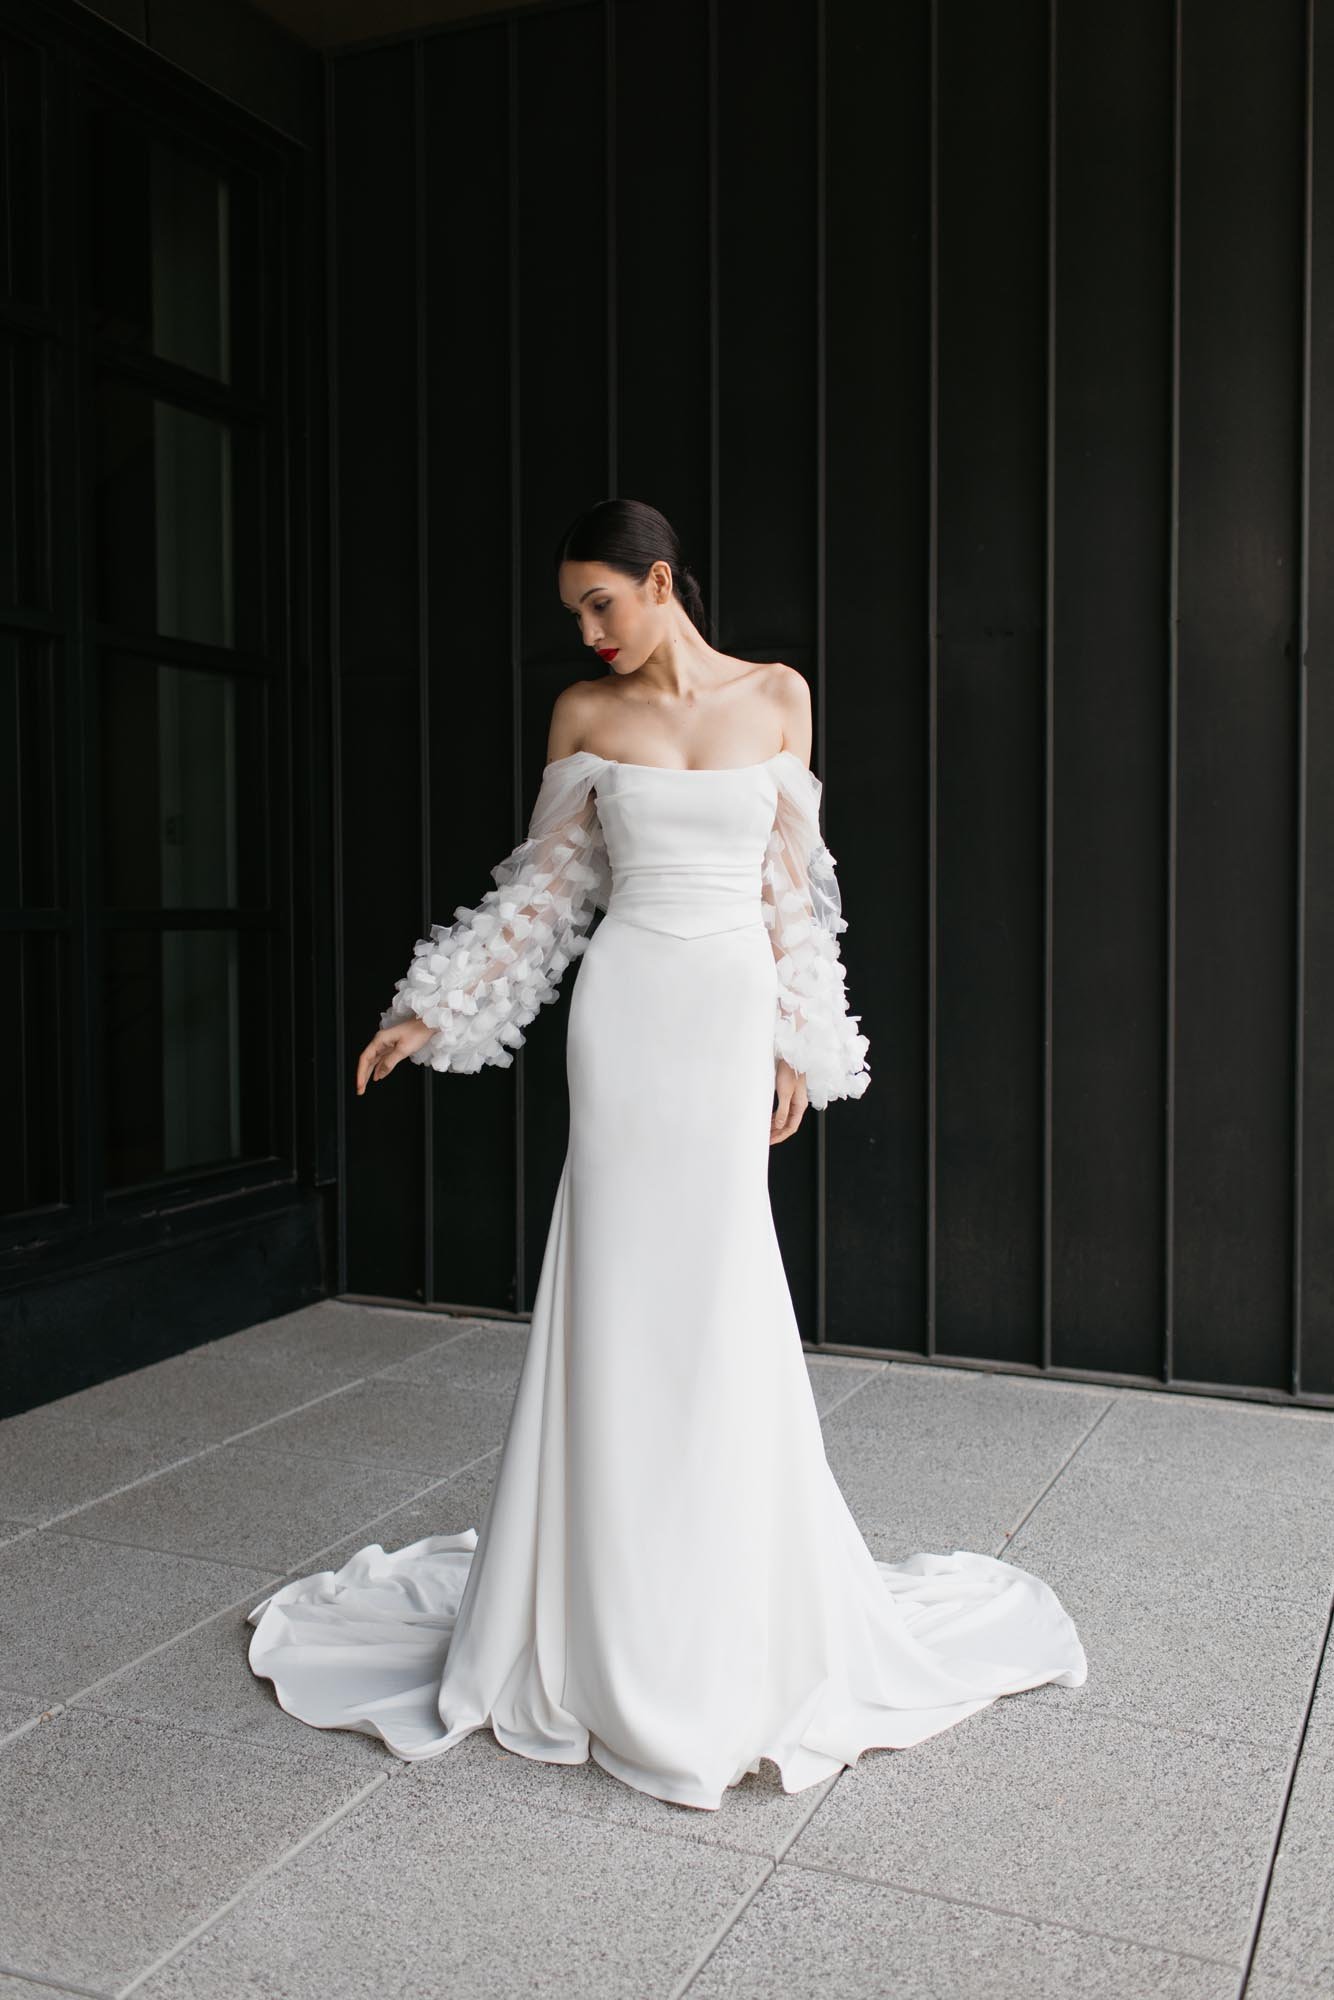 enola-tara-latour-wedding-dress-1.jpg